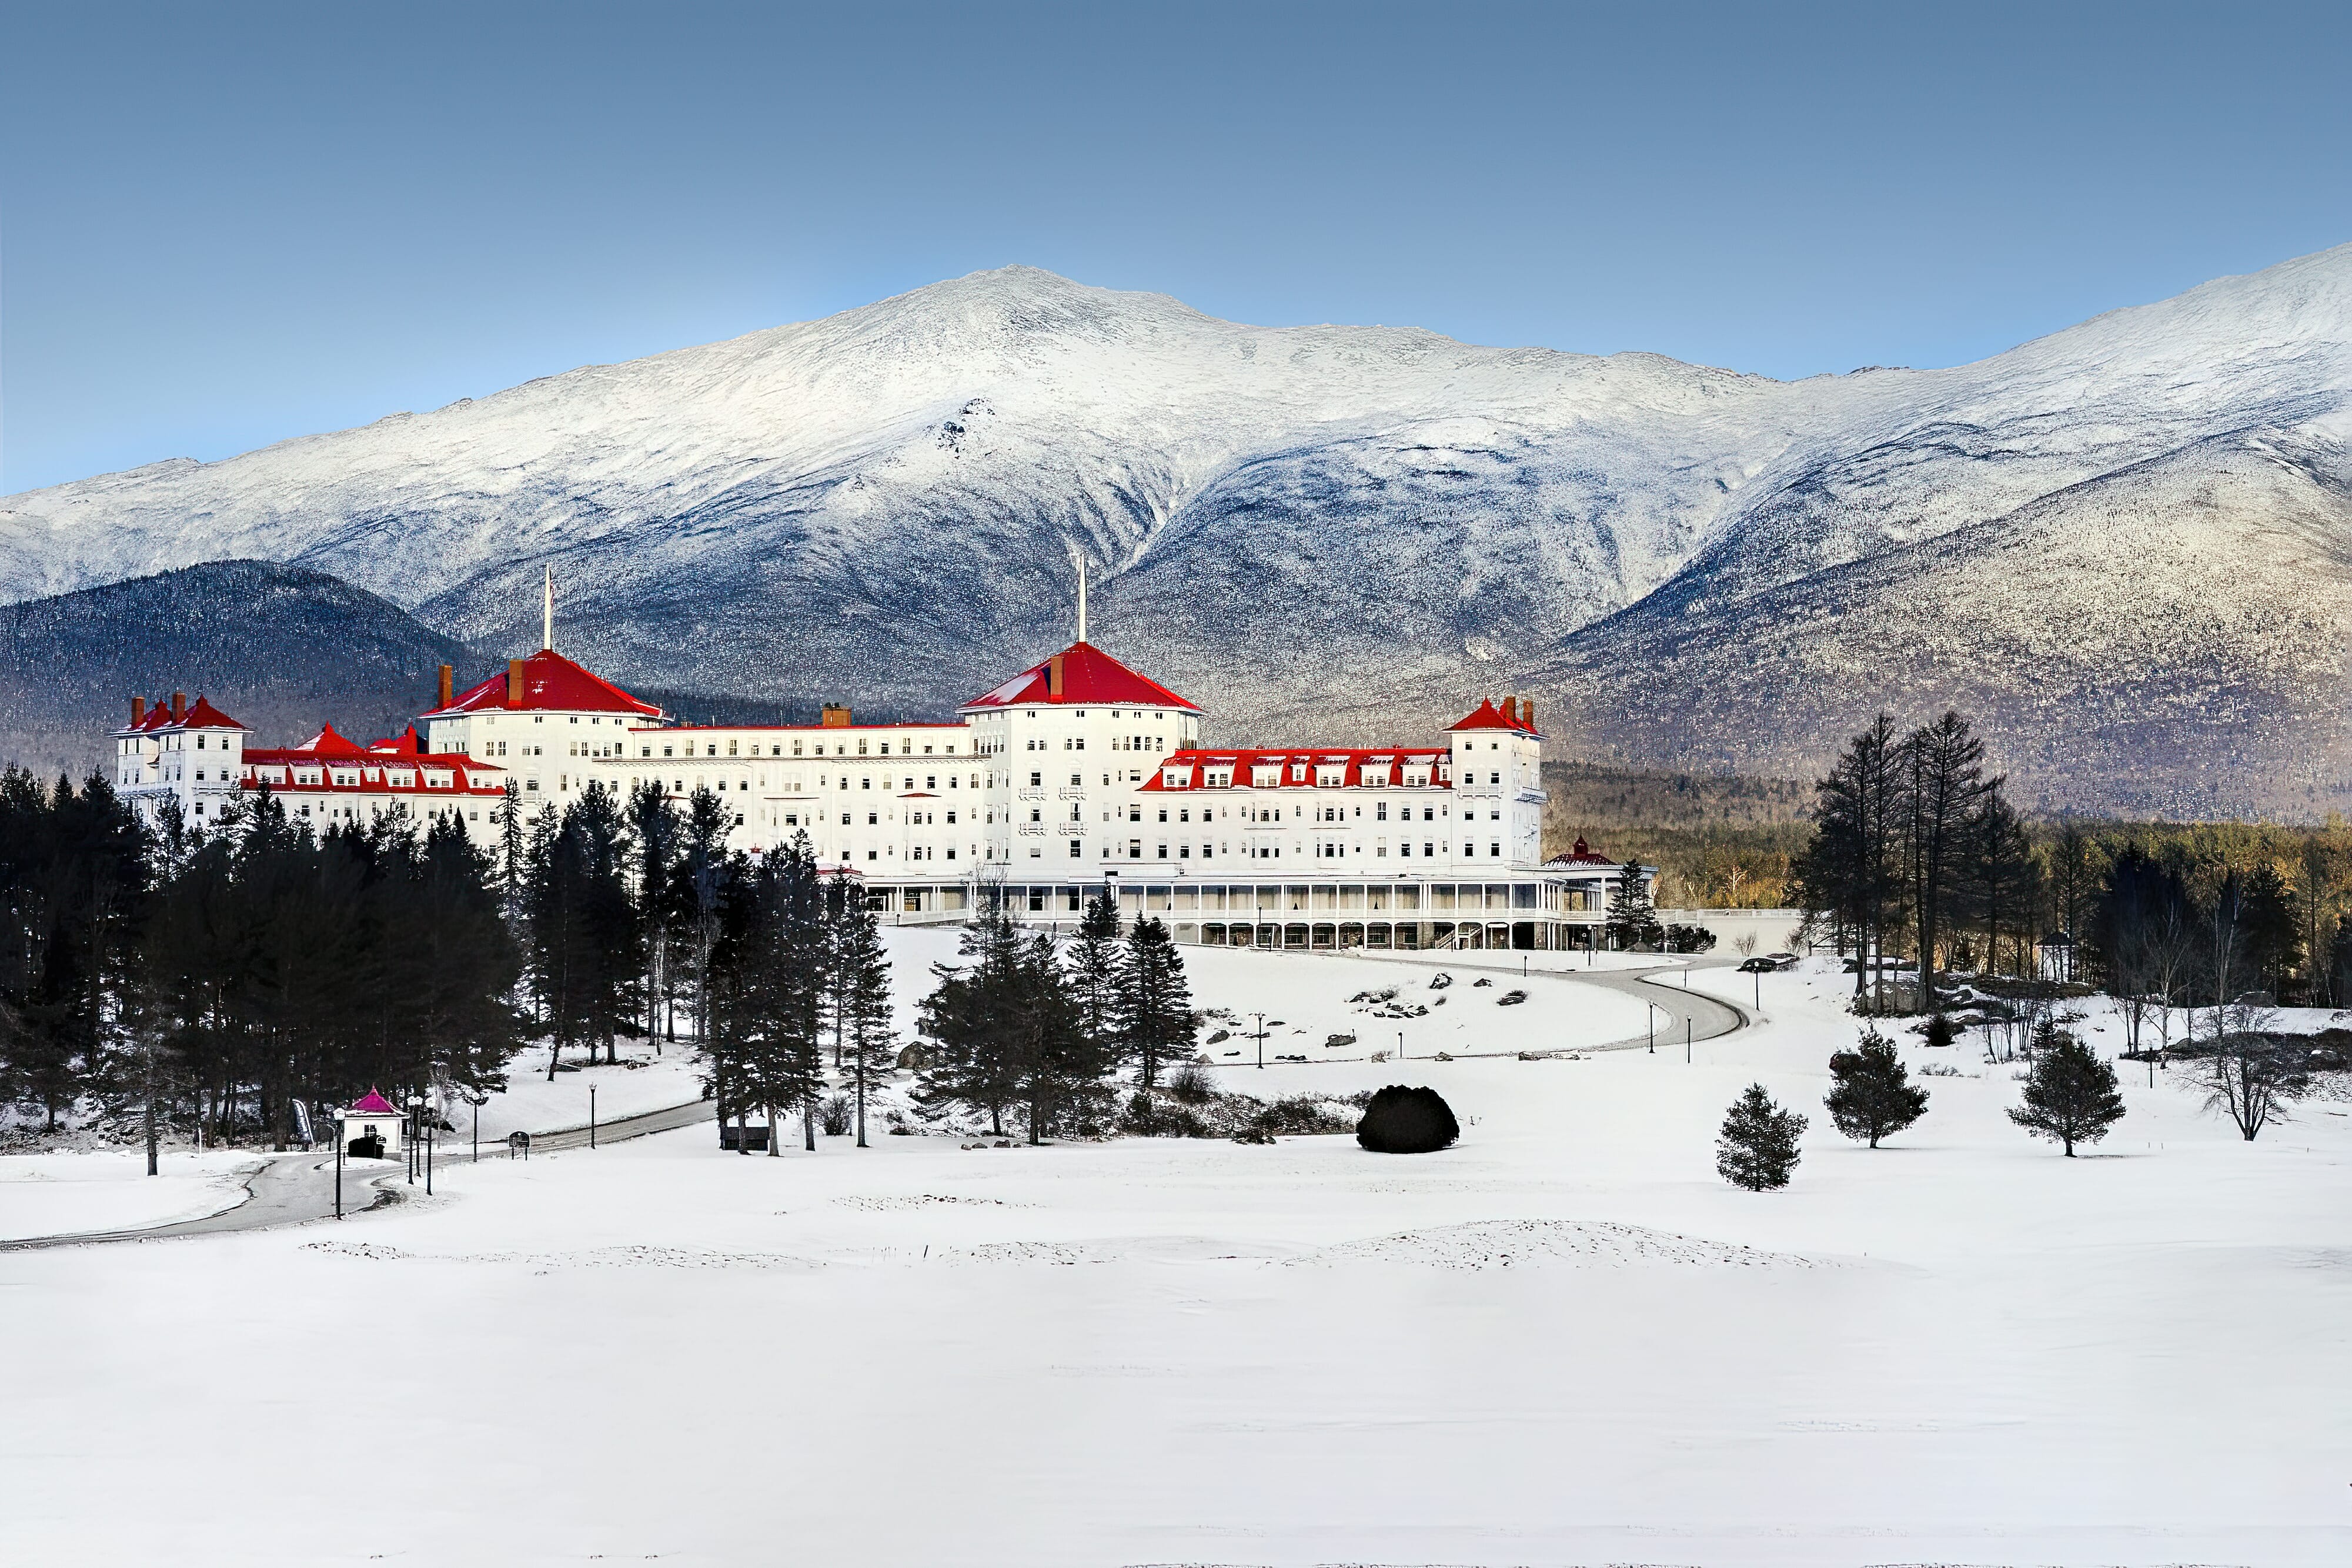 Building view of Omni Mount Washington Resort